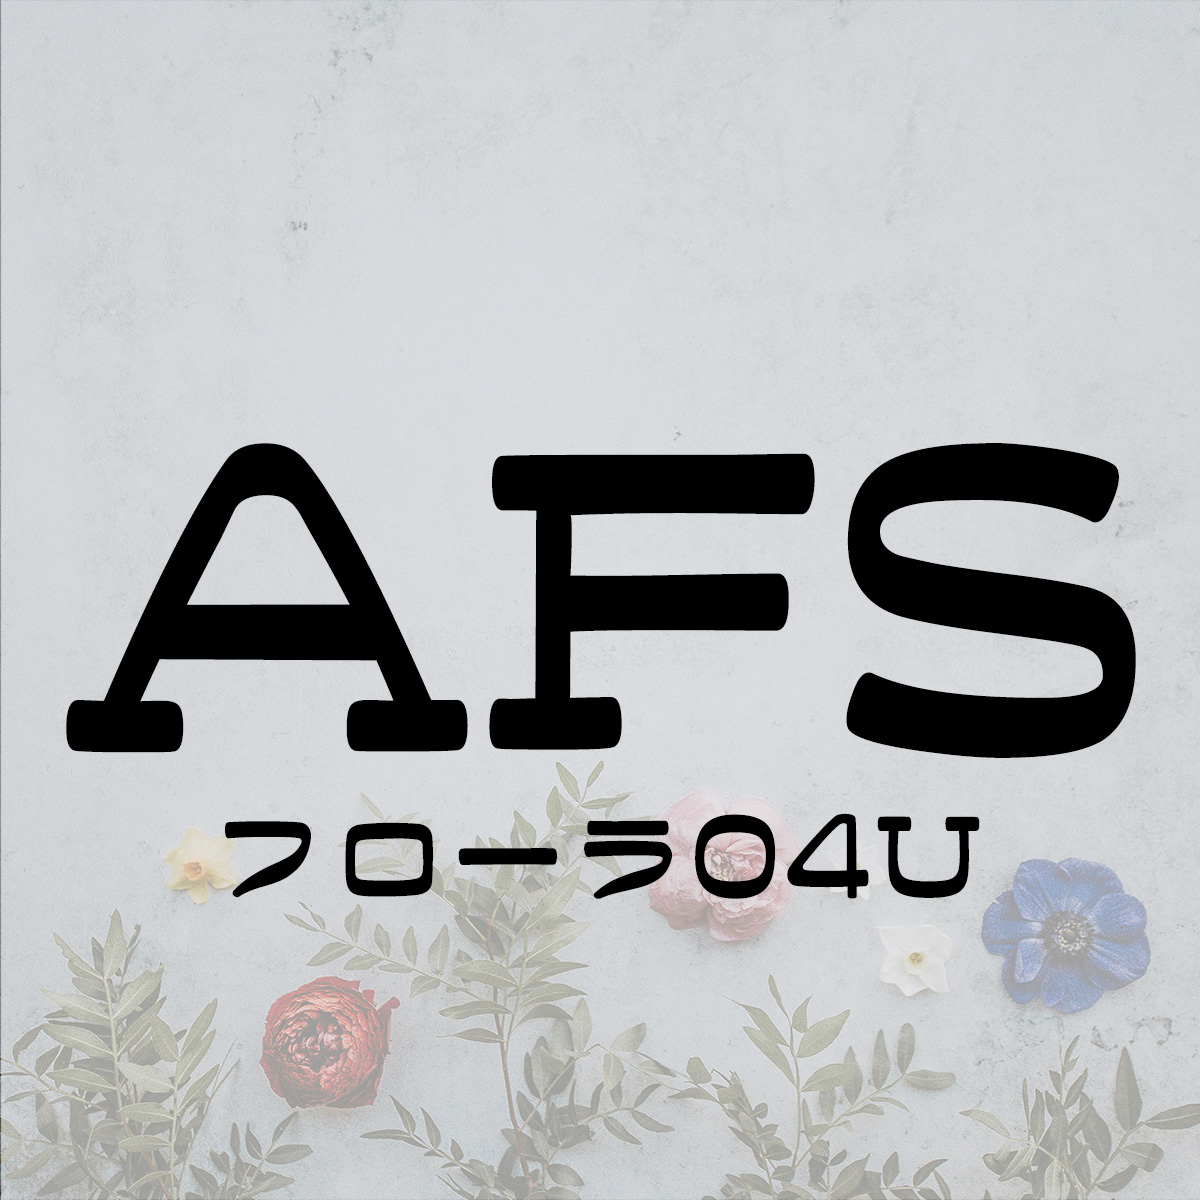 AFSフローラ04U